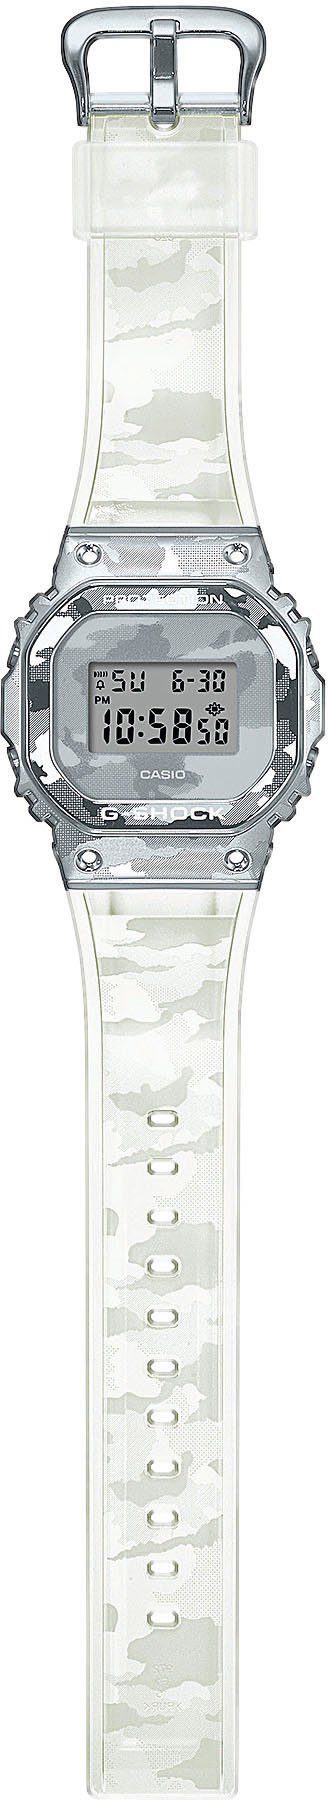 CASIO Chronograph G-SHOCK GM-5600SCM-1ER